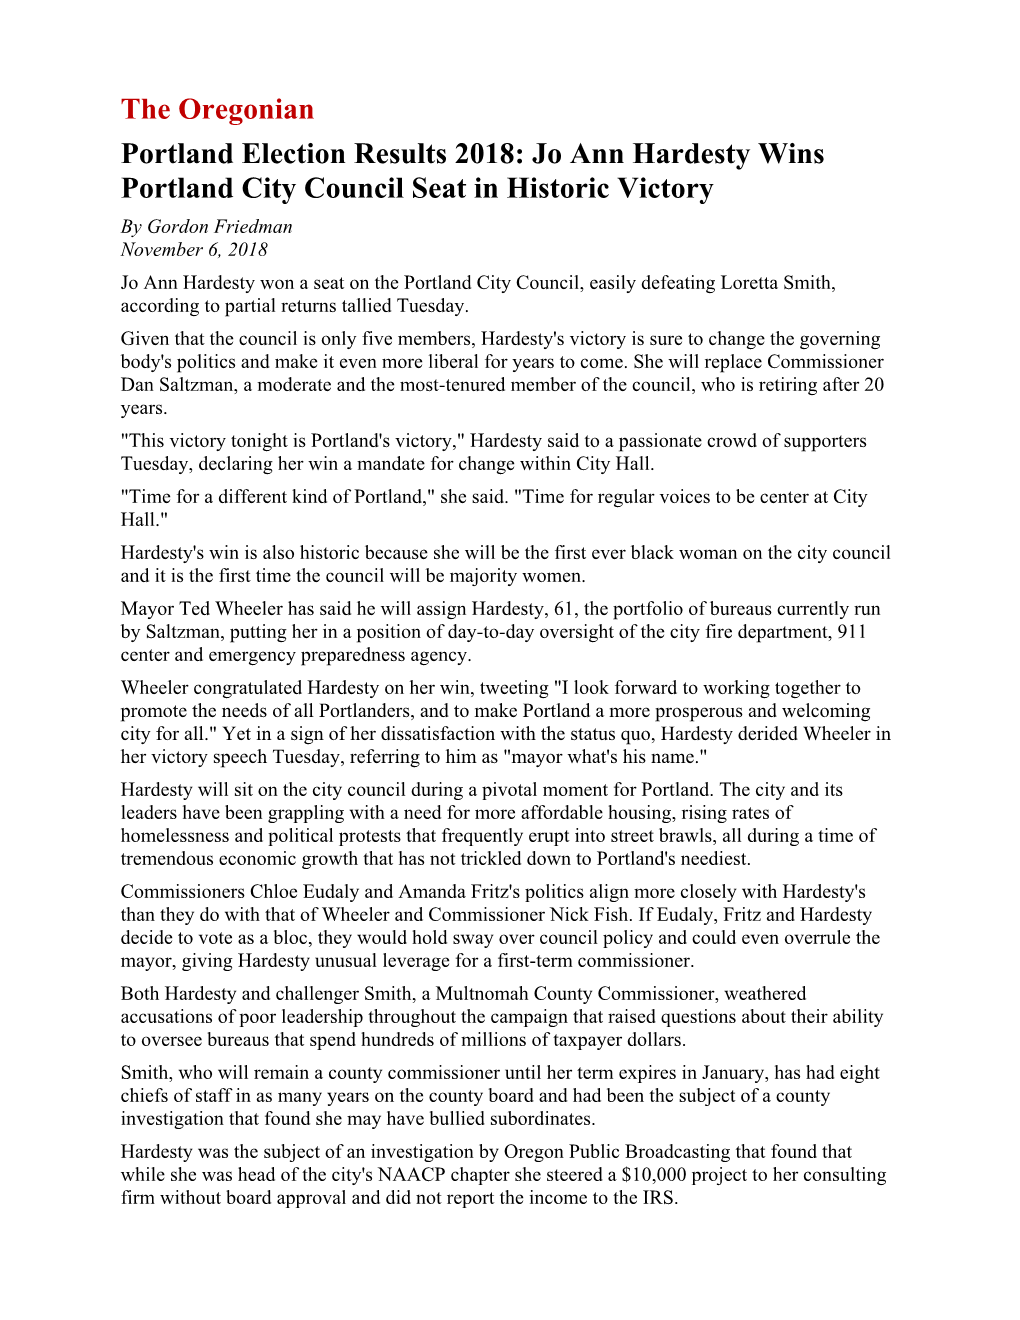 Jo Ann Hardesty Wins Portland City Council